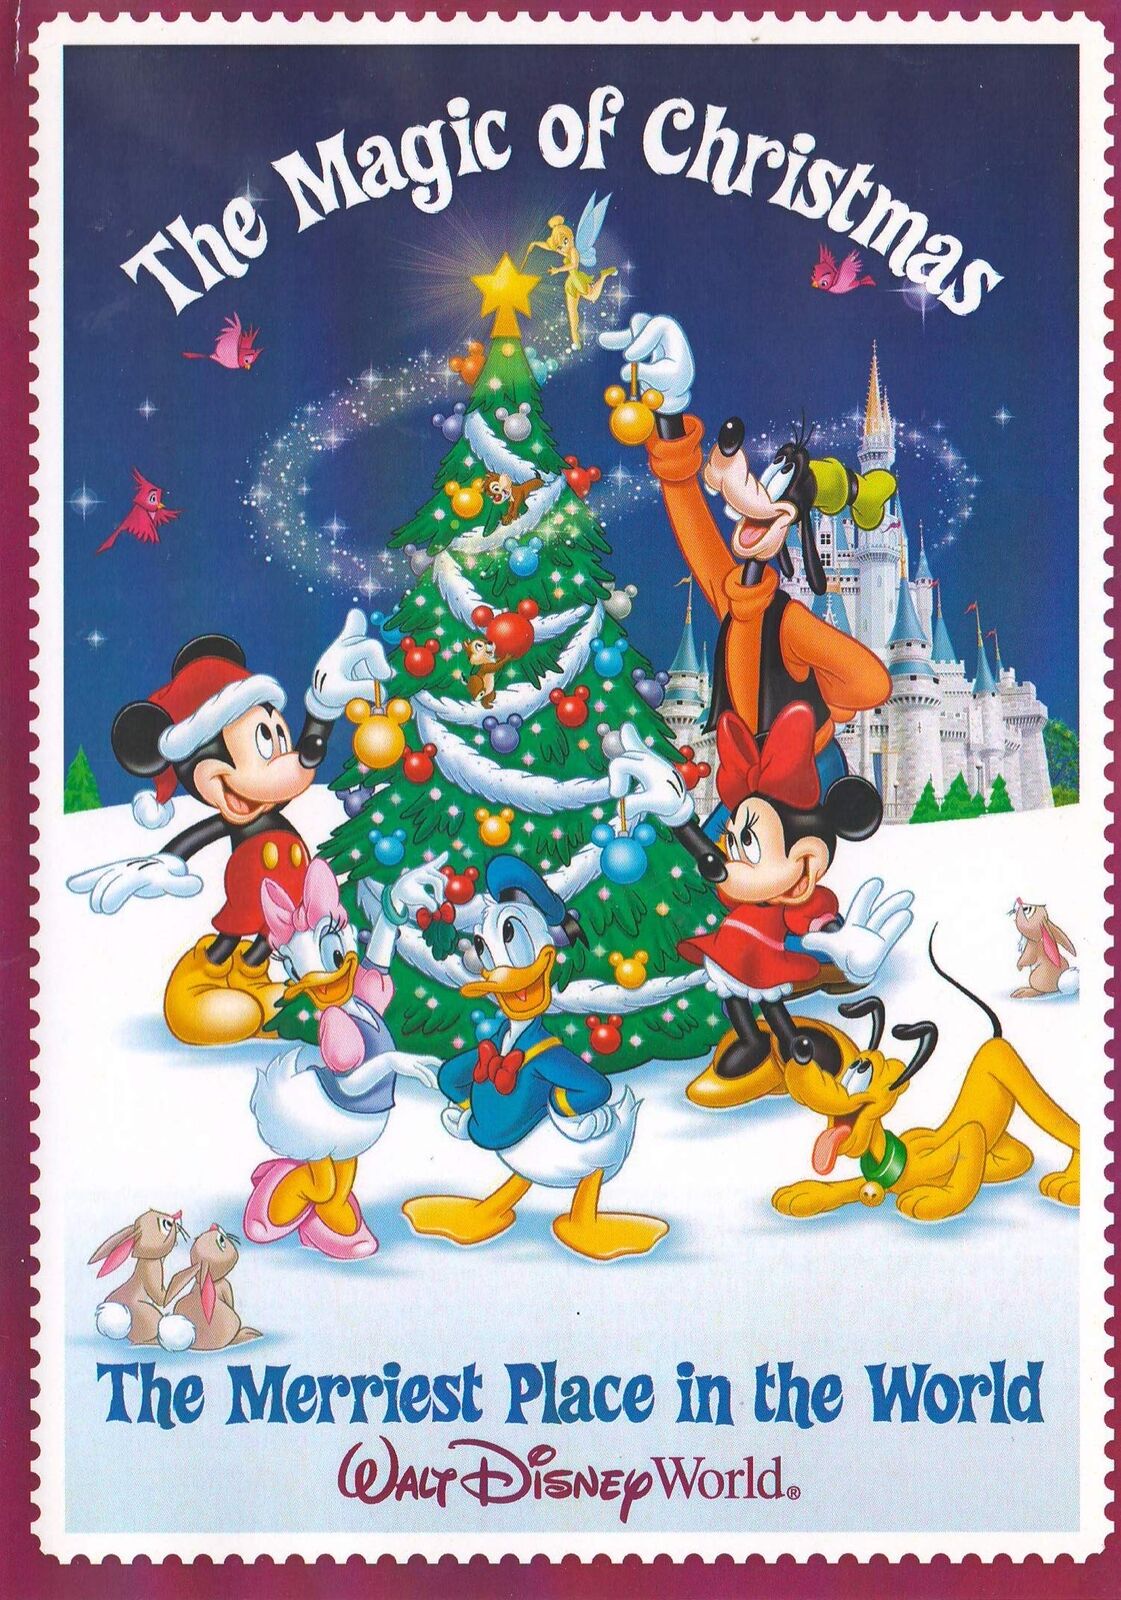 The Magic of Christmas at Walt Disney World [DVD]